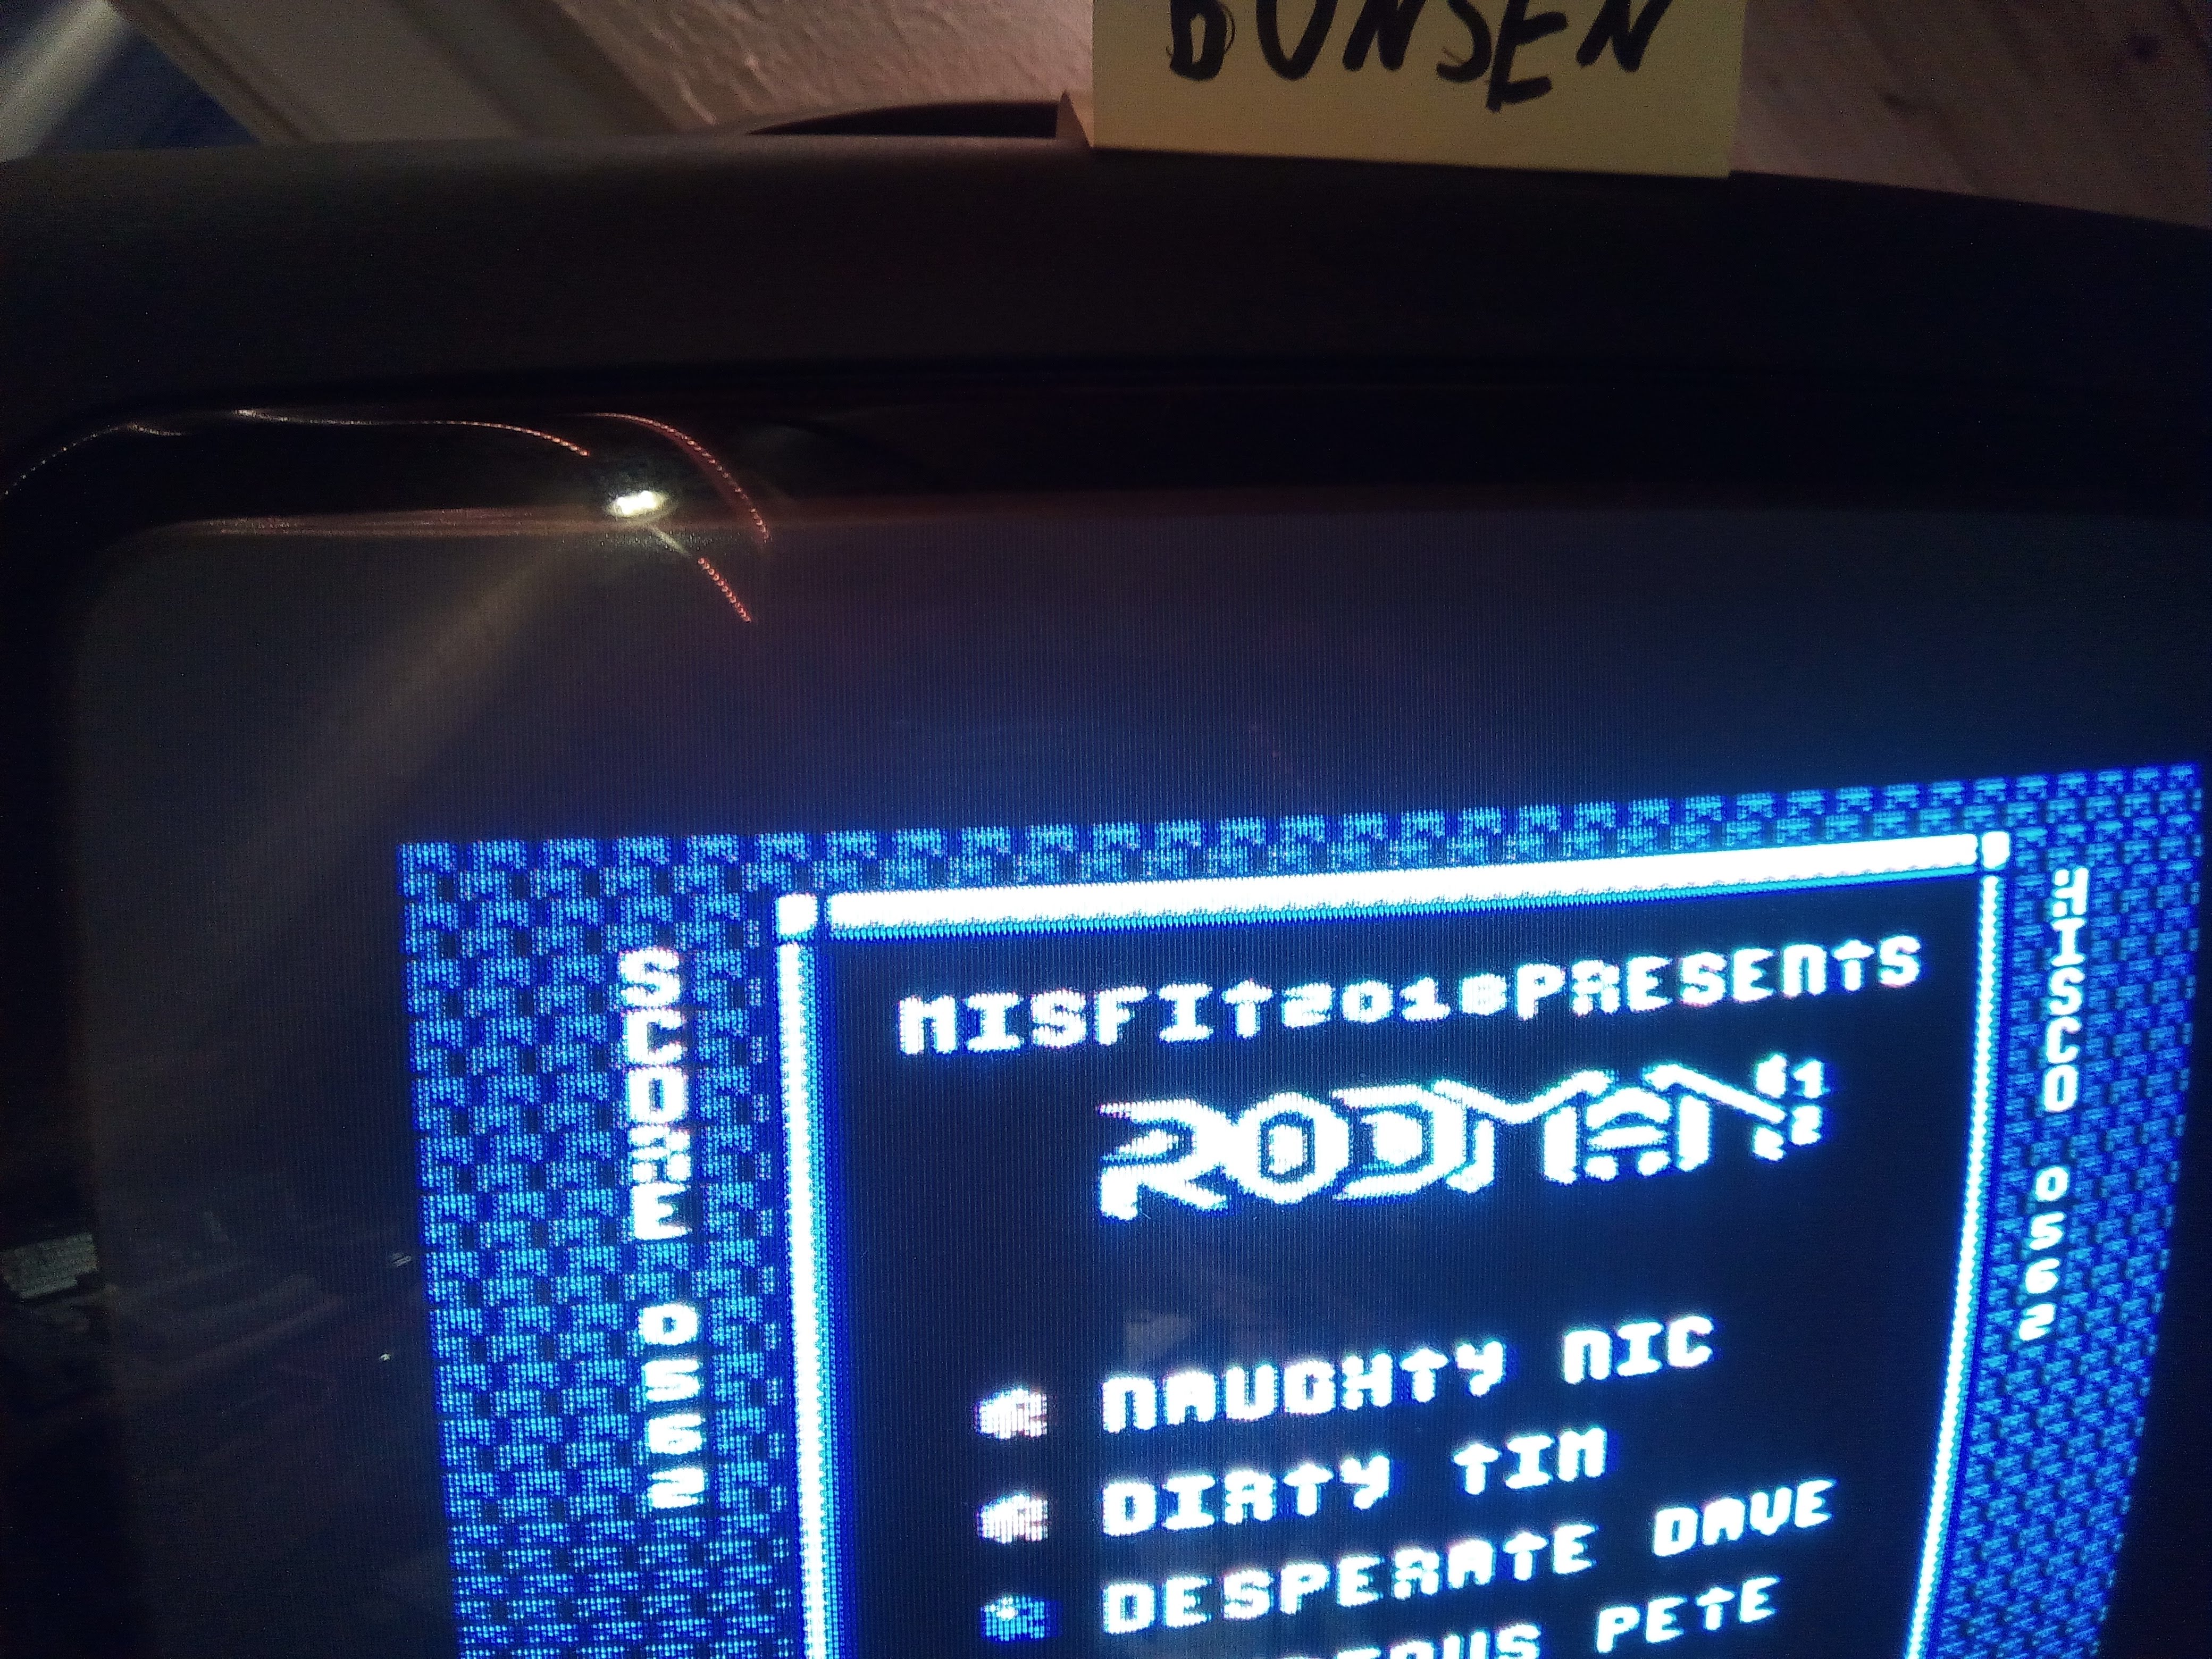 Bunsen: Rodman [LORES] (Atari 400/800/XL/XE) 562 points on 2020-04-25 15:06:52